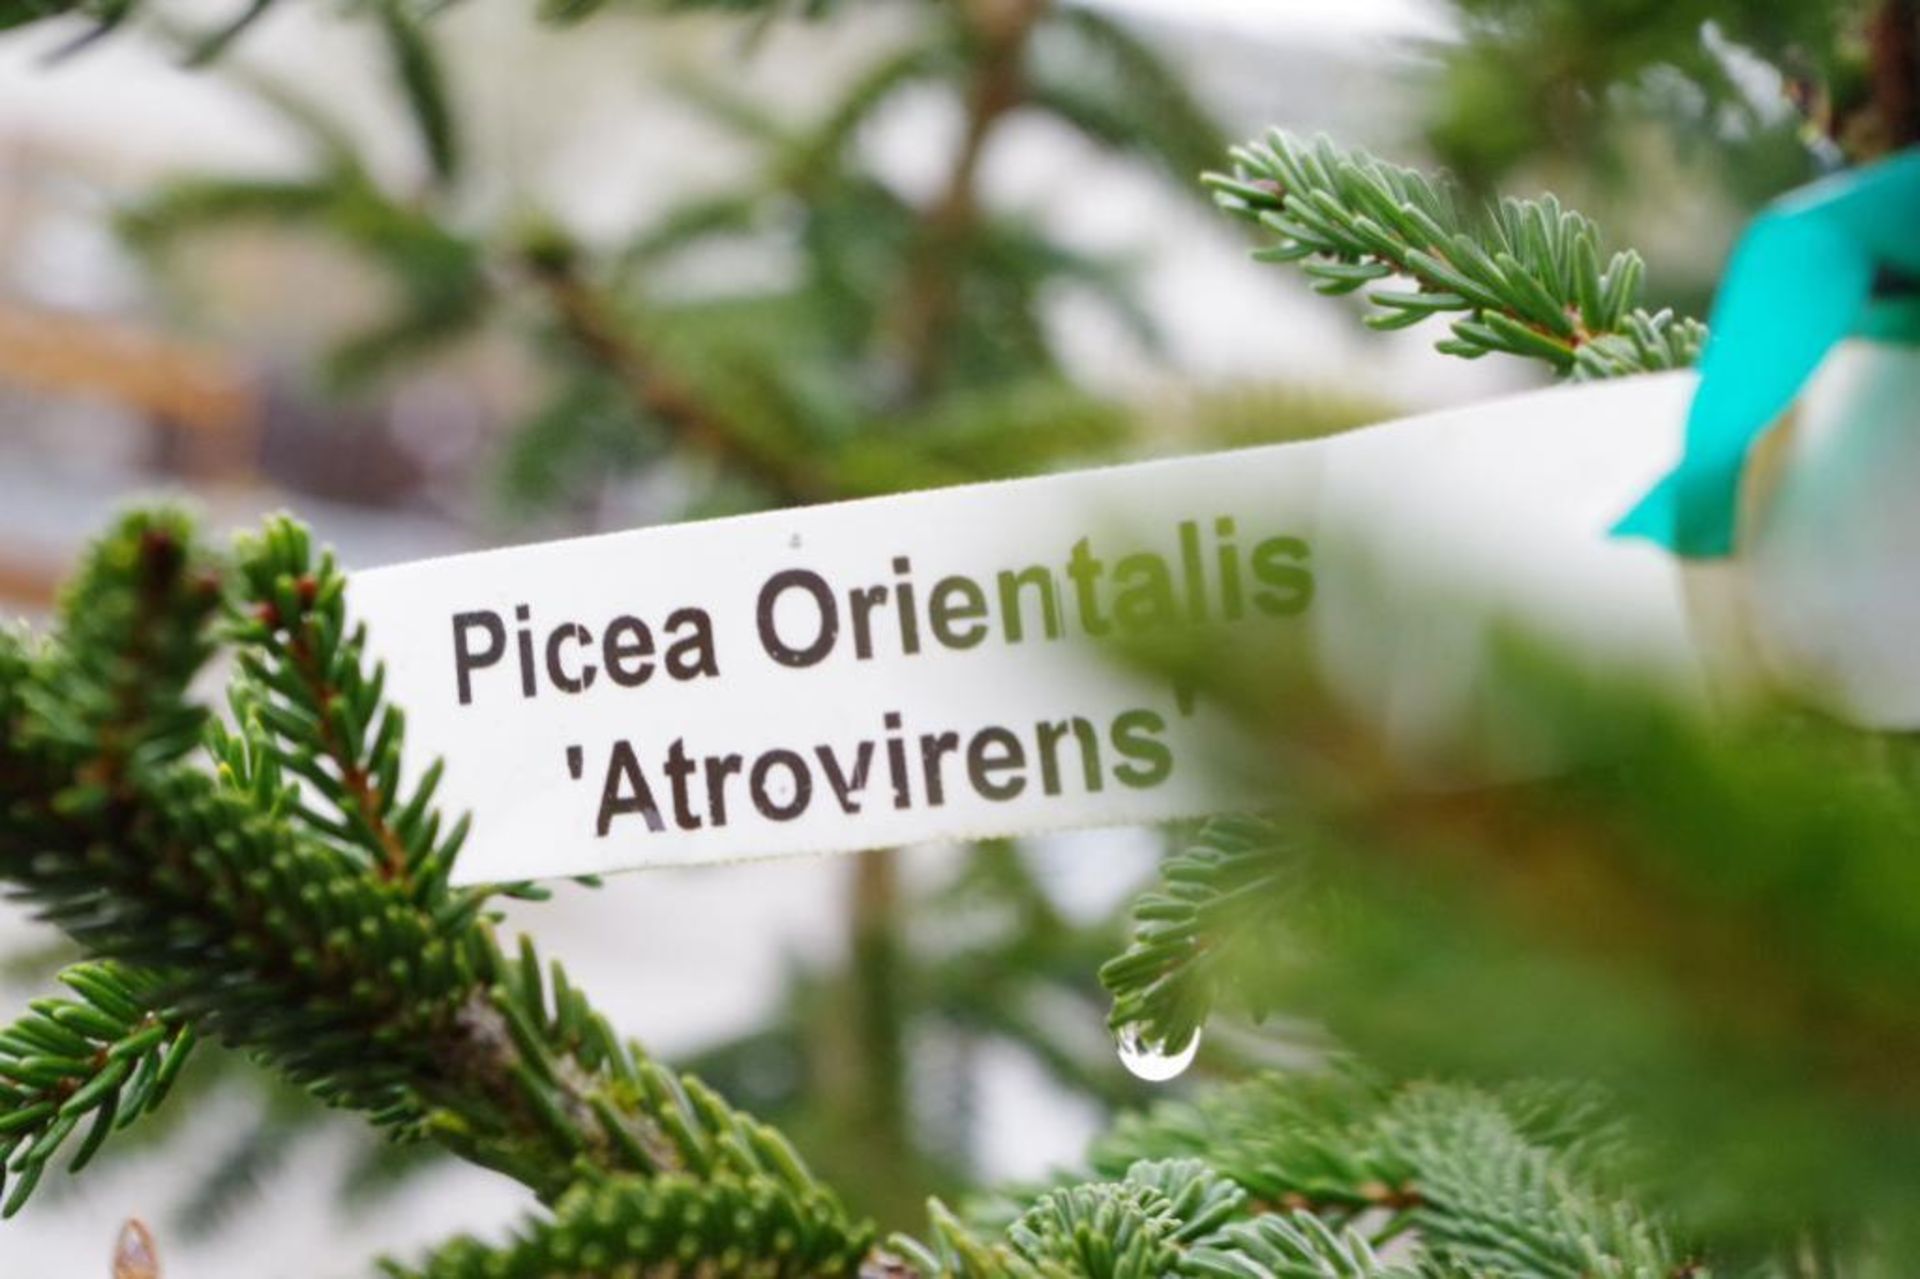 4' Picea Orientalis 'Atrovirens' - Image 2 of 3